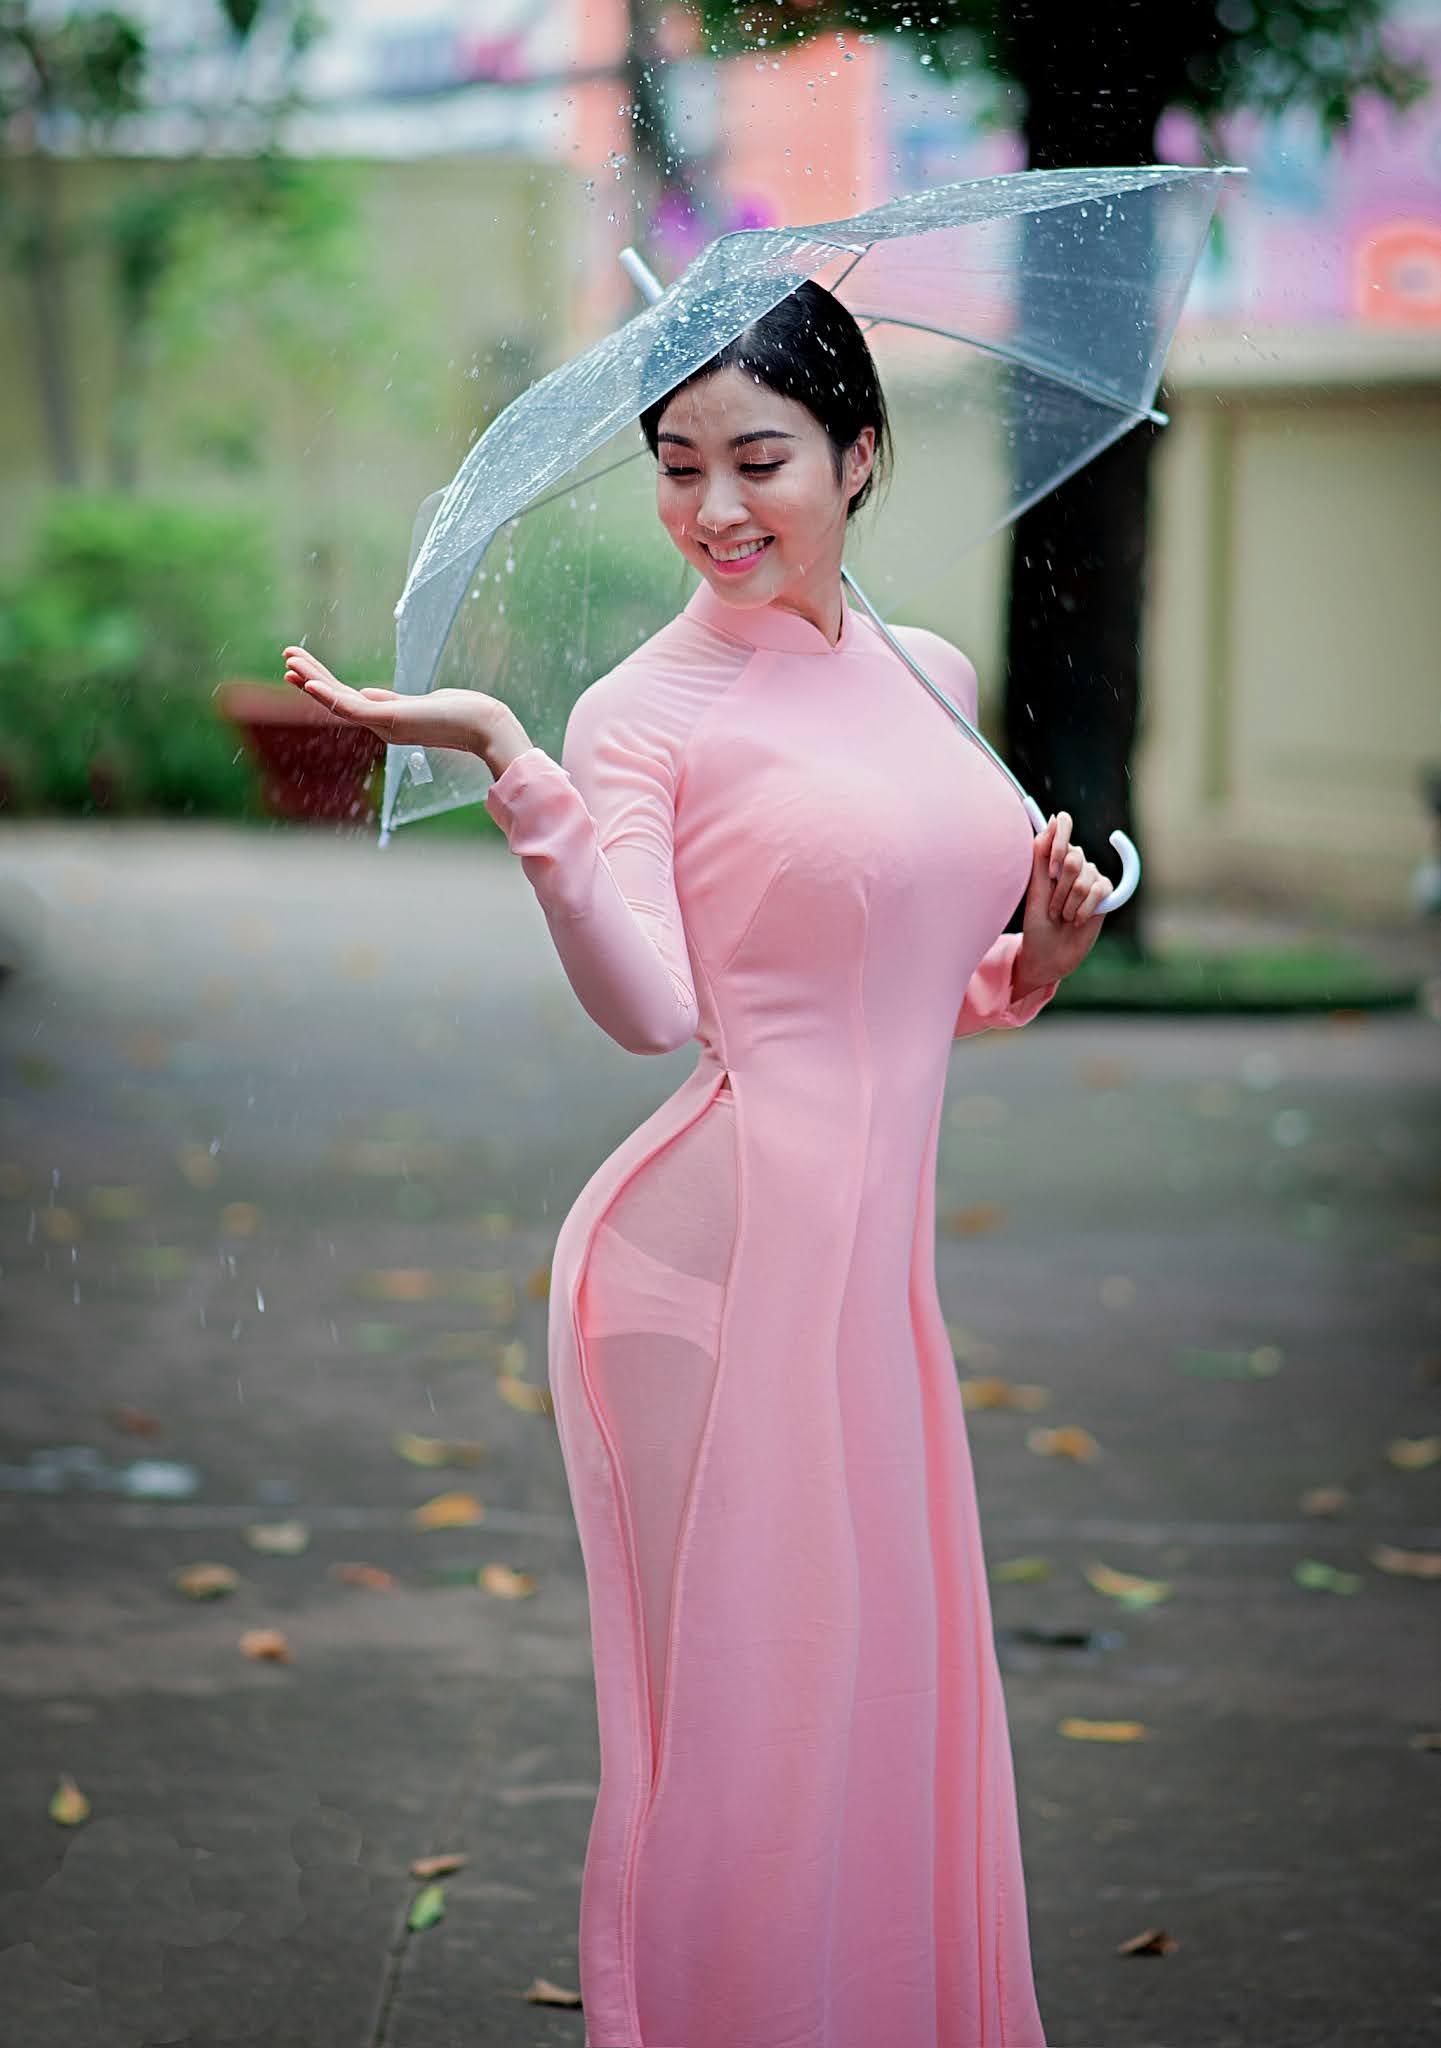 Hot model in pink dress